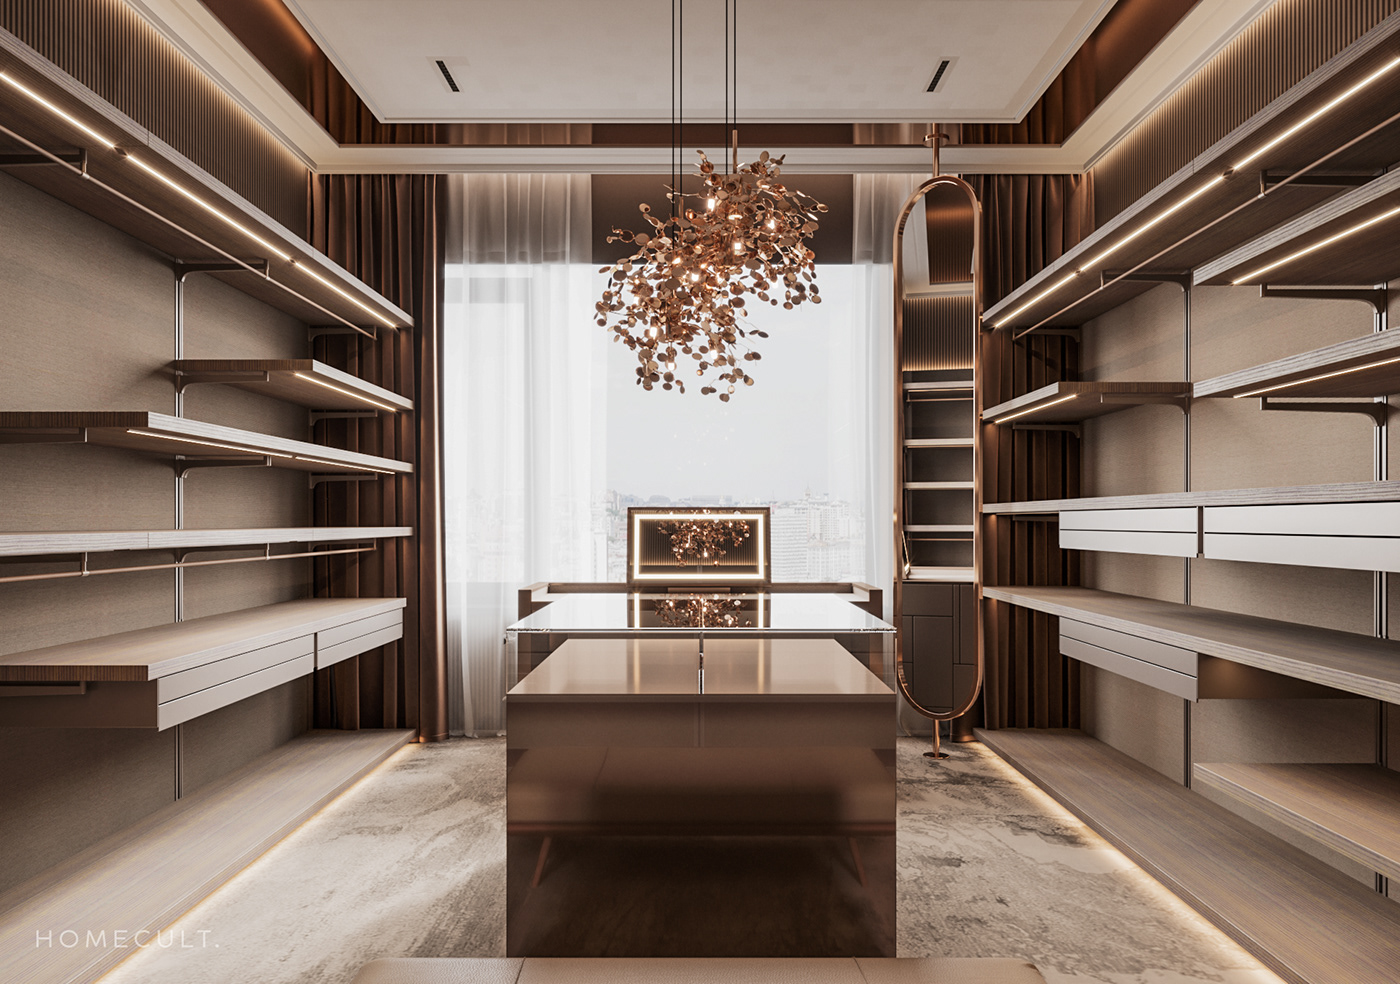 cinema 4d corona renderer design homecult Interior interior design  luxury